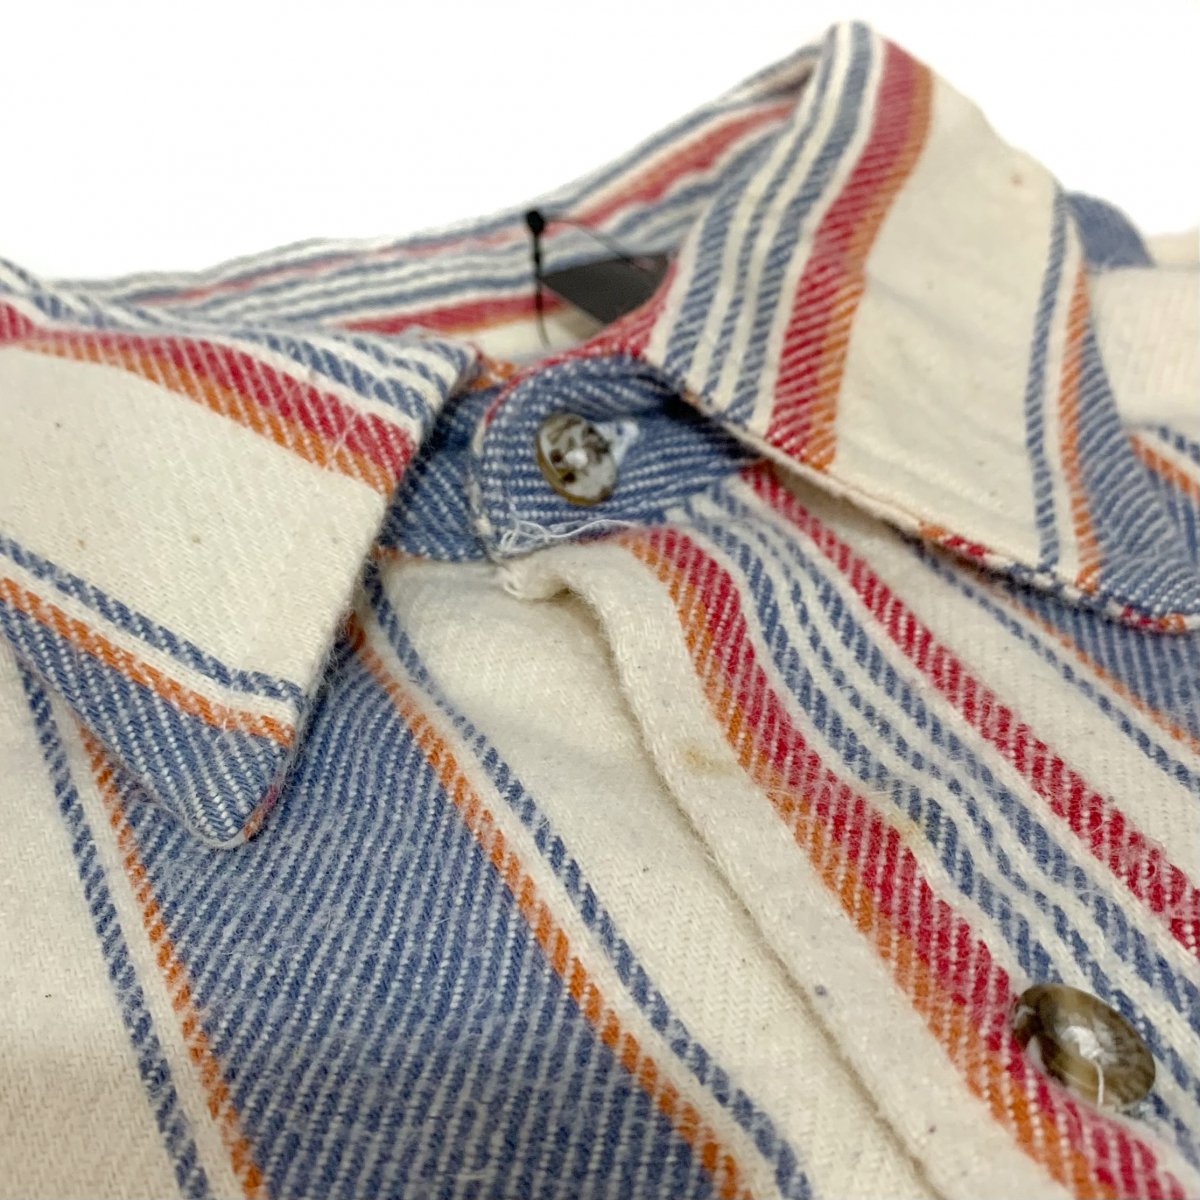 90s Carhartt Multi Stripe Flannel L/S Shirt 白赤青 XL カーハート 